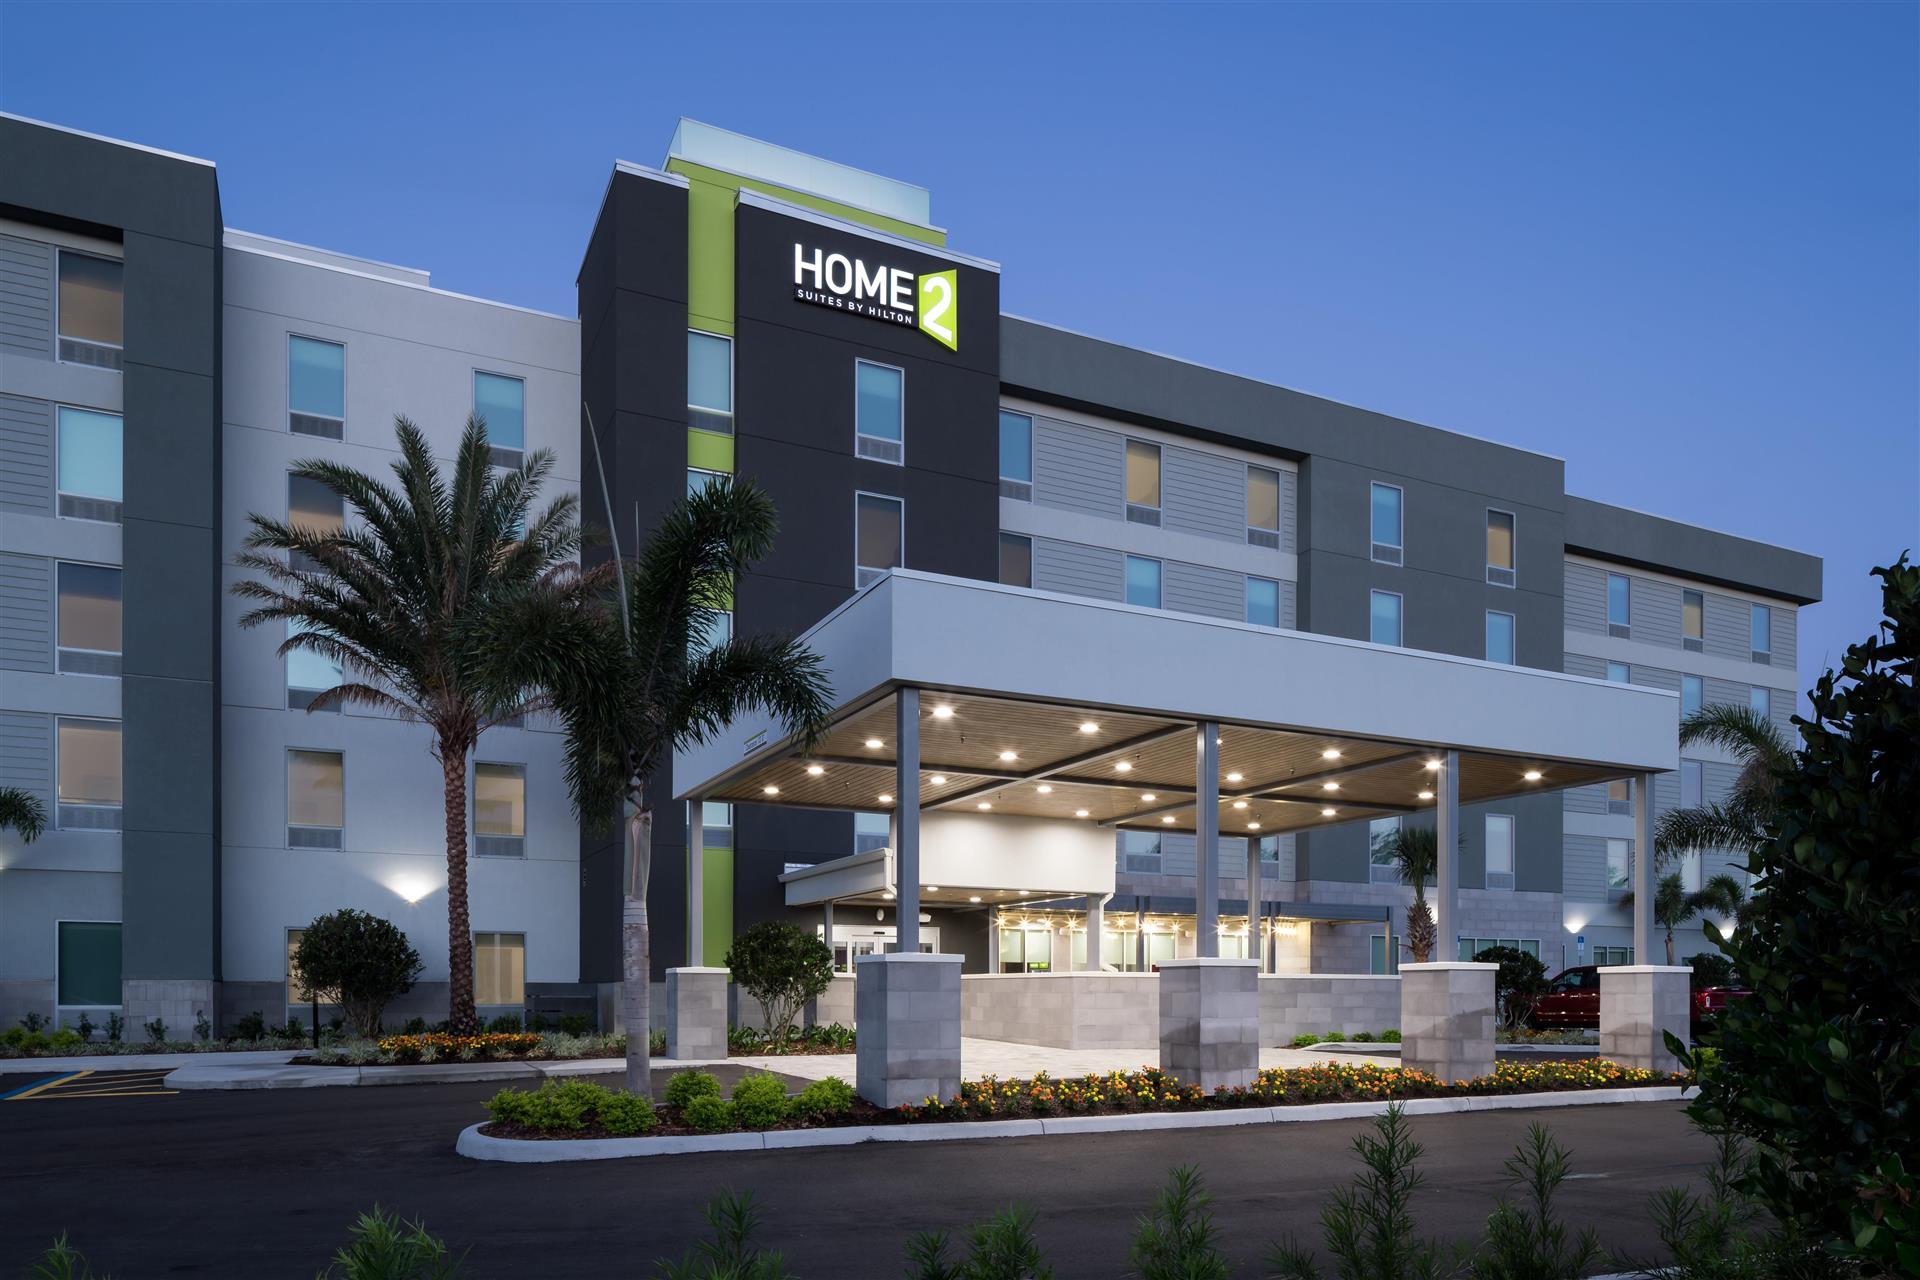 Home2 Suites by Hilton Orlando Airport in Orlando, FL